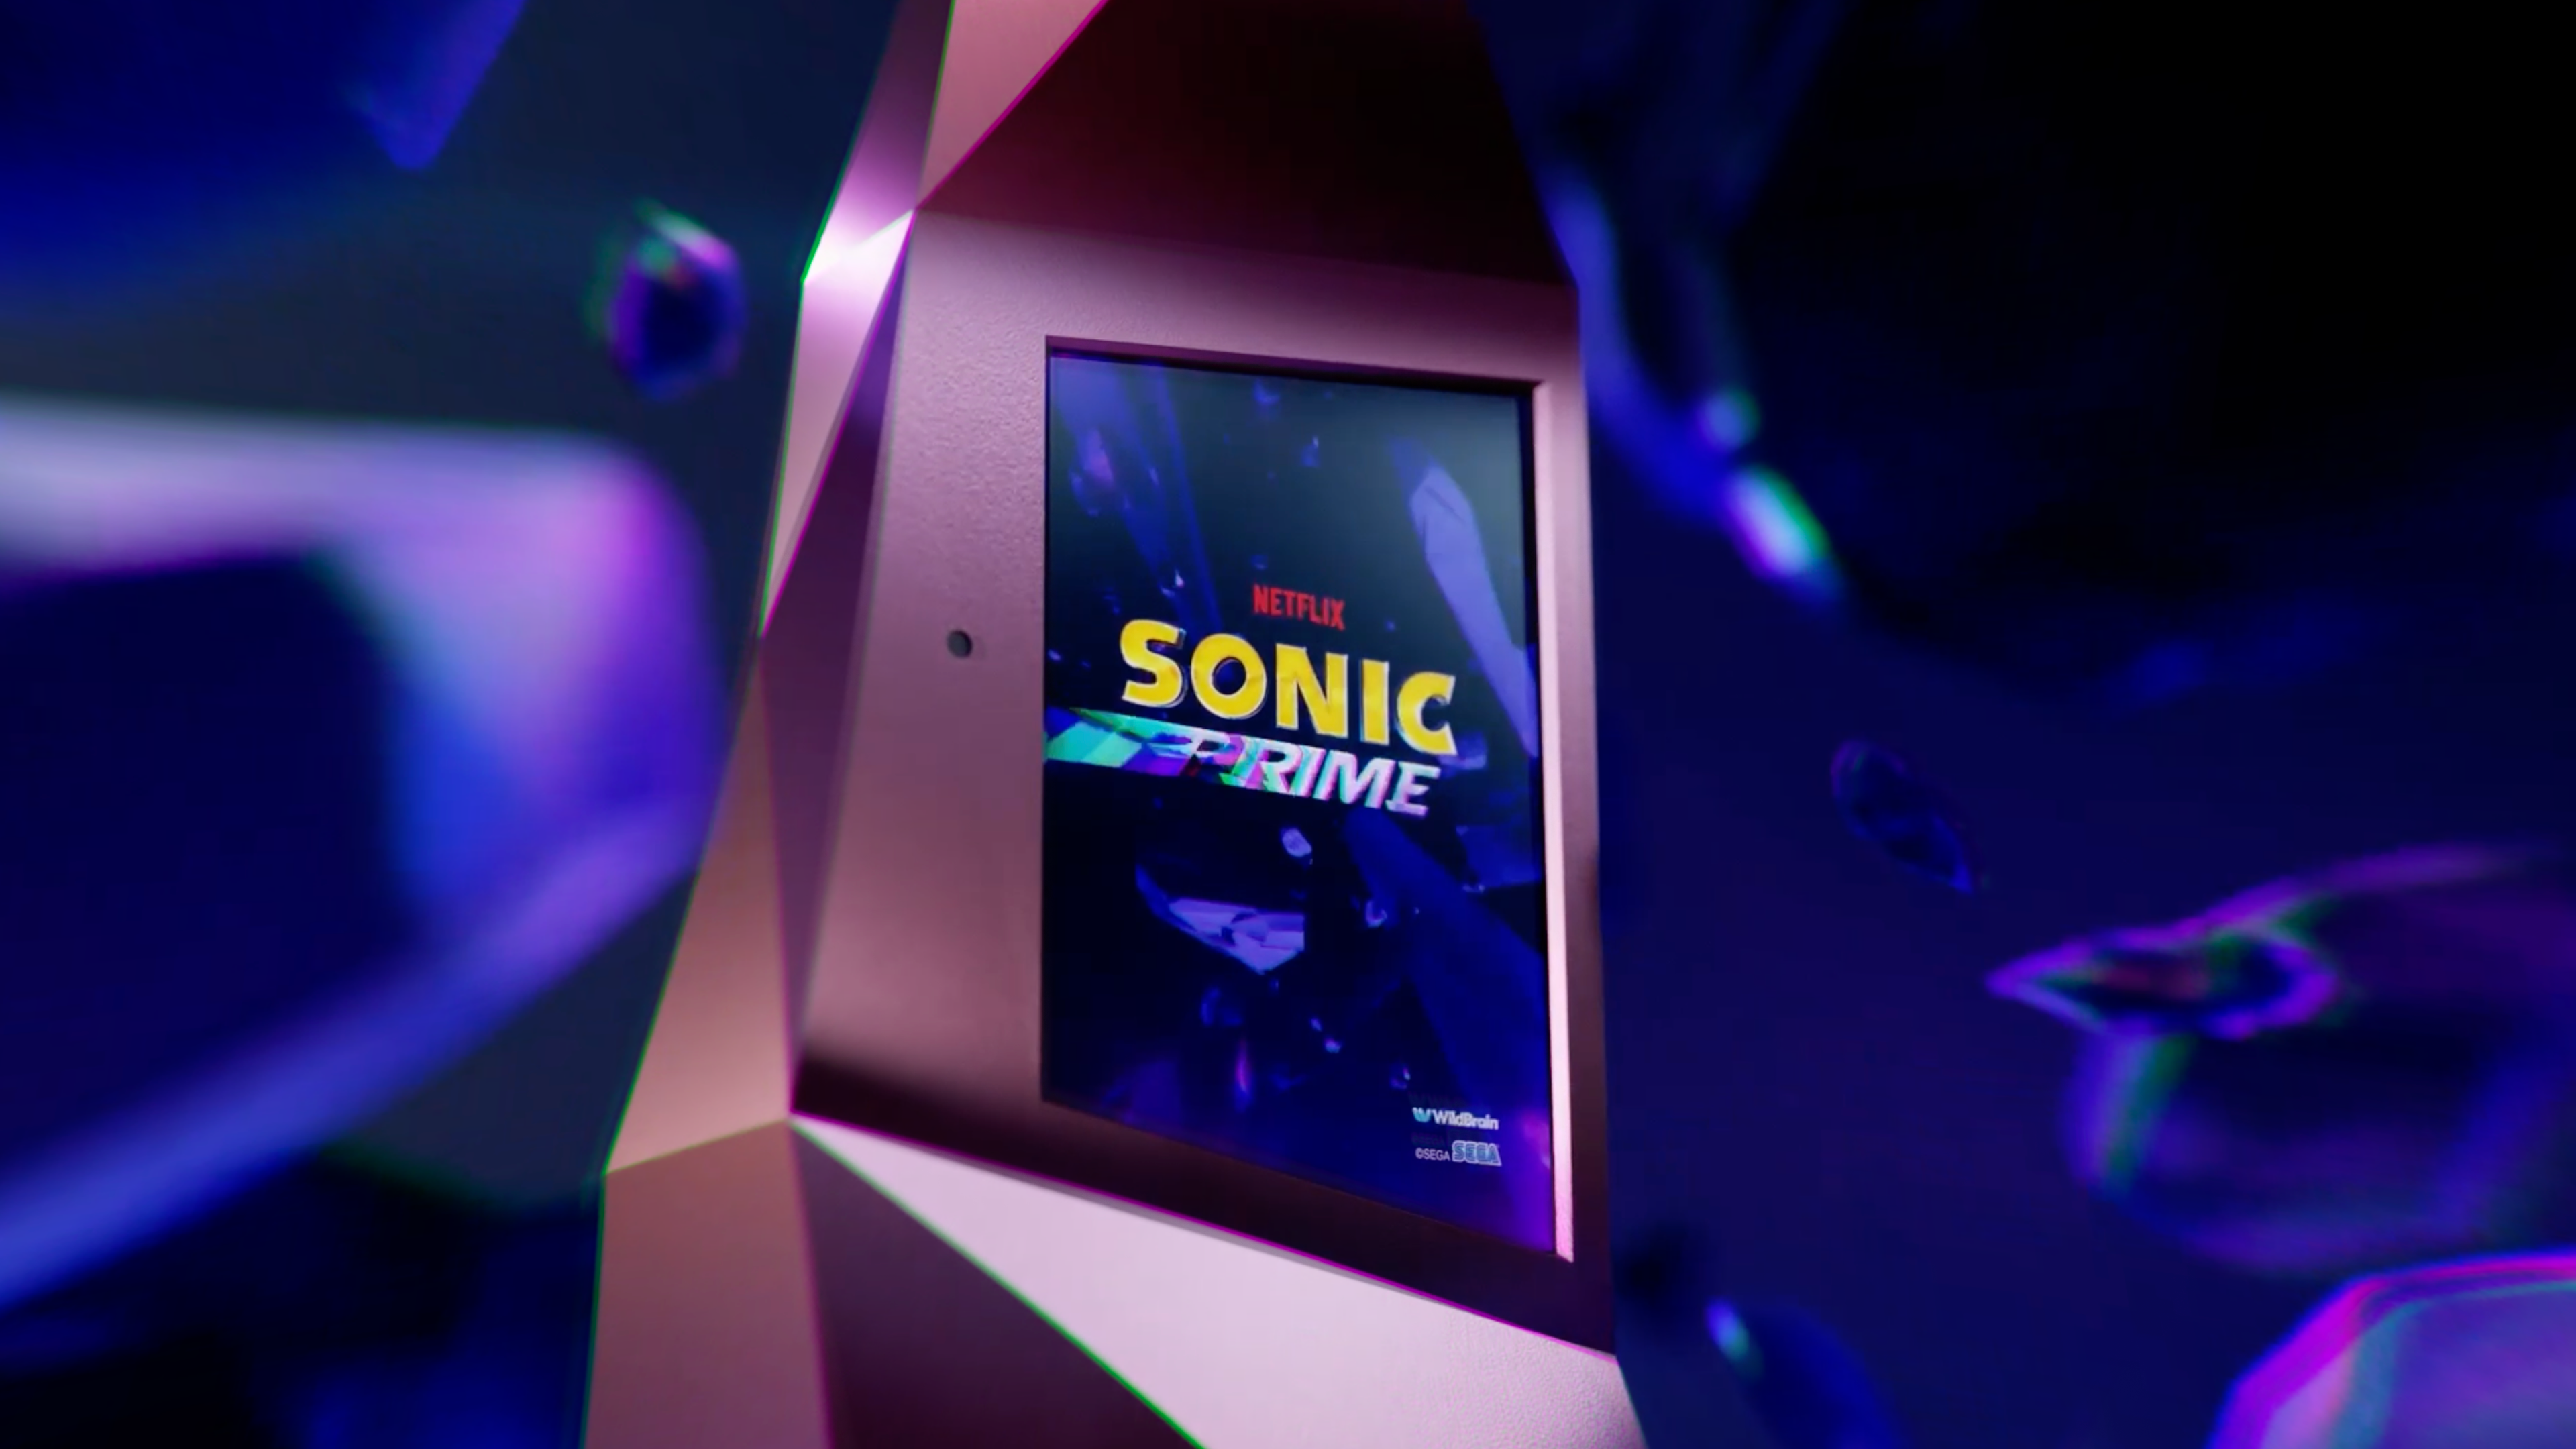 Netflix Sonic Shatterverse Experience